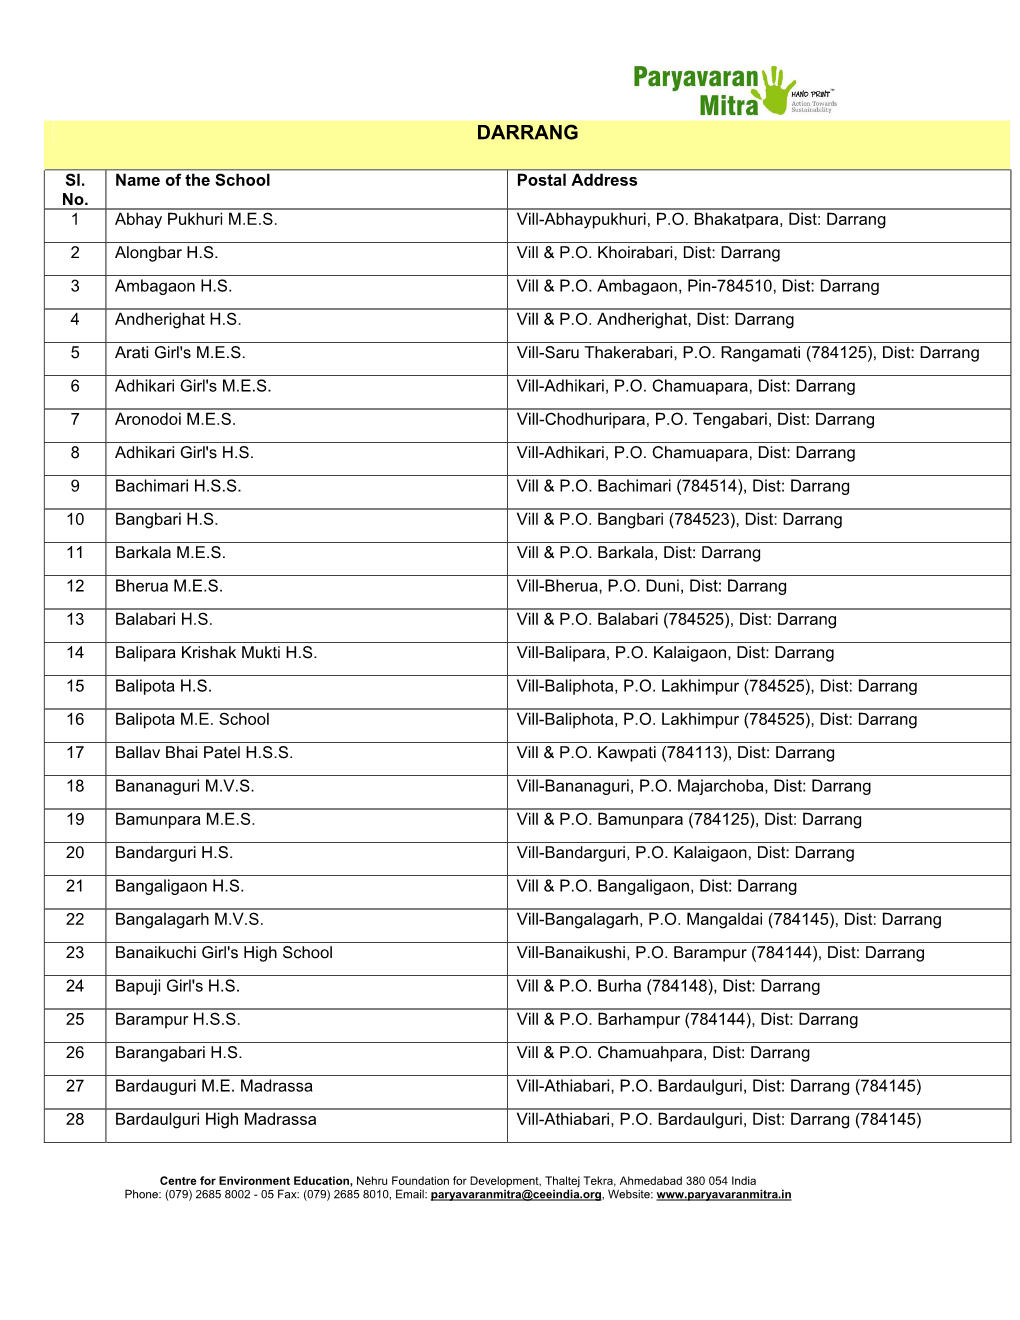 NGC School List